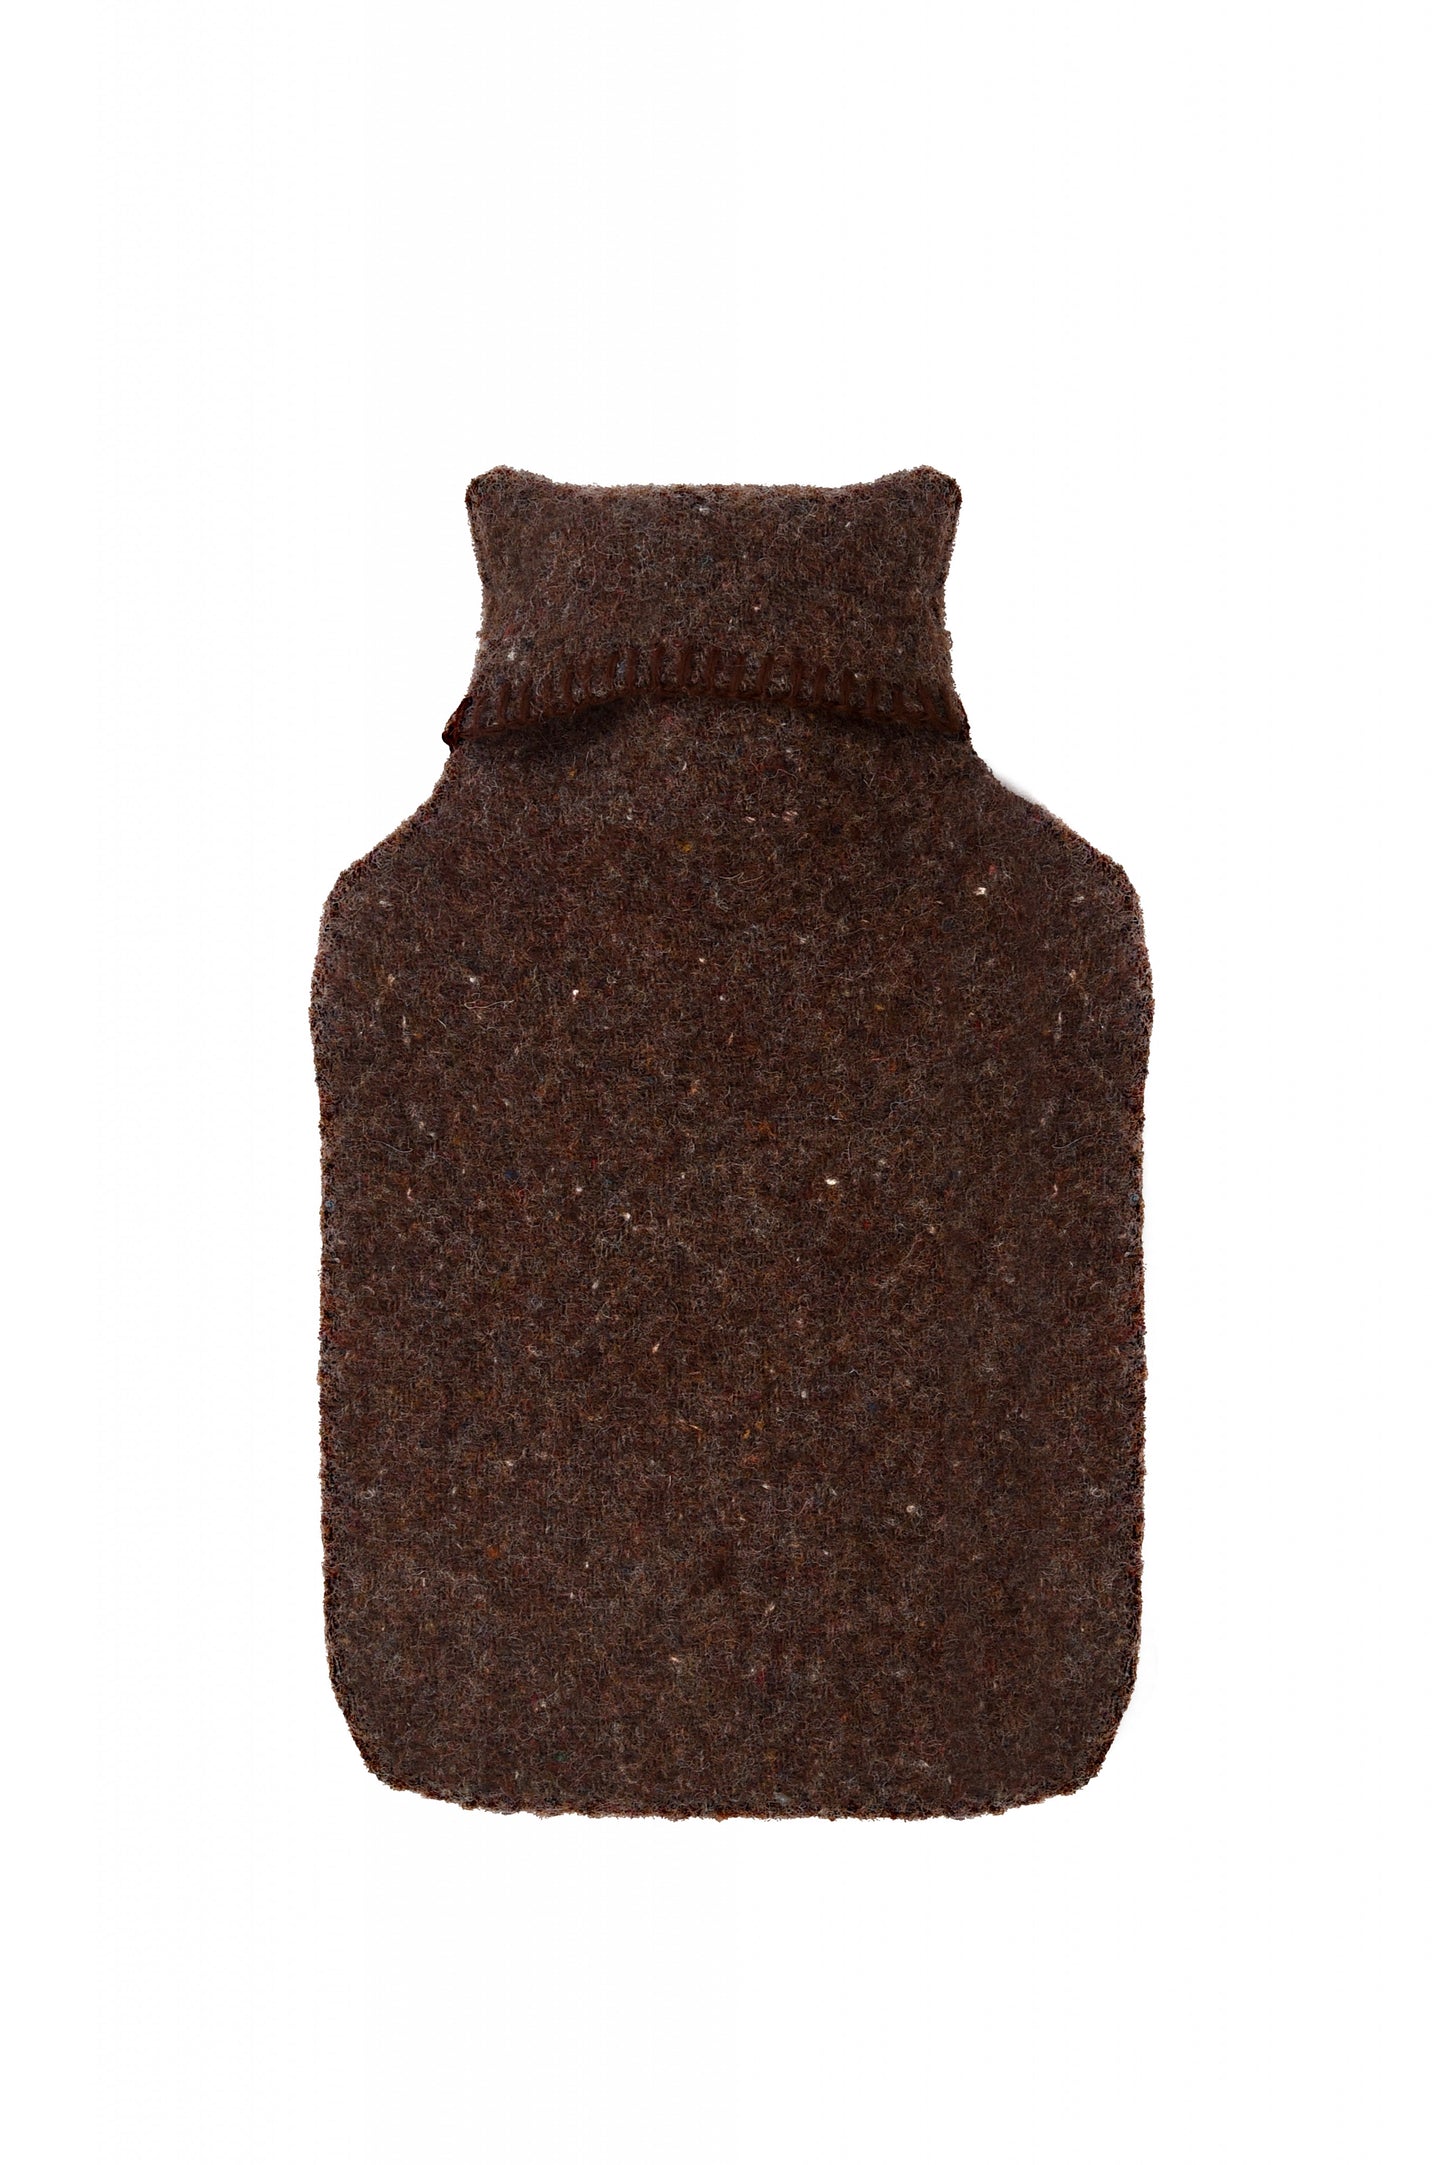 Tweedmill Recycled Wool Hot Water Bottle in Diagonal Stripe in Latte